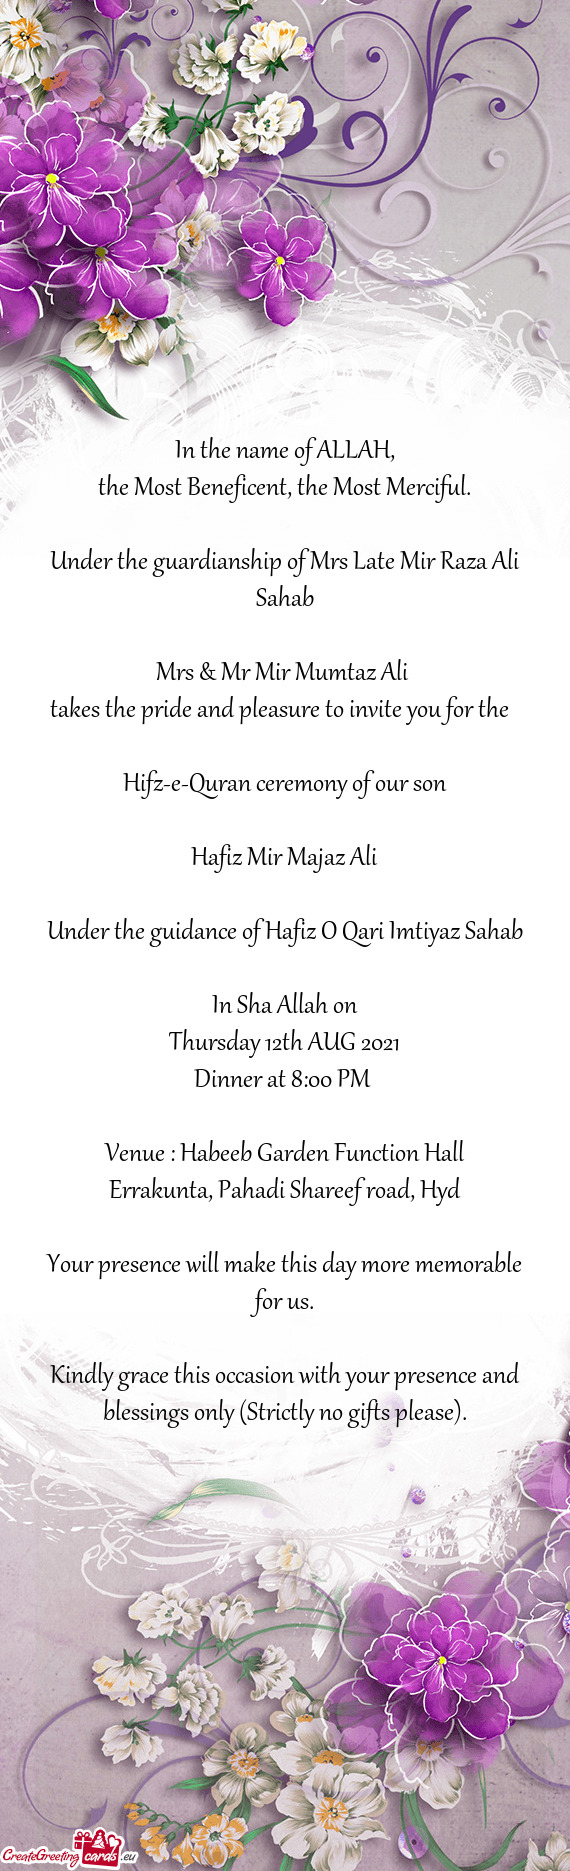 Hifz-e-Quran ceremony of our son